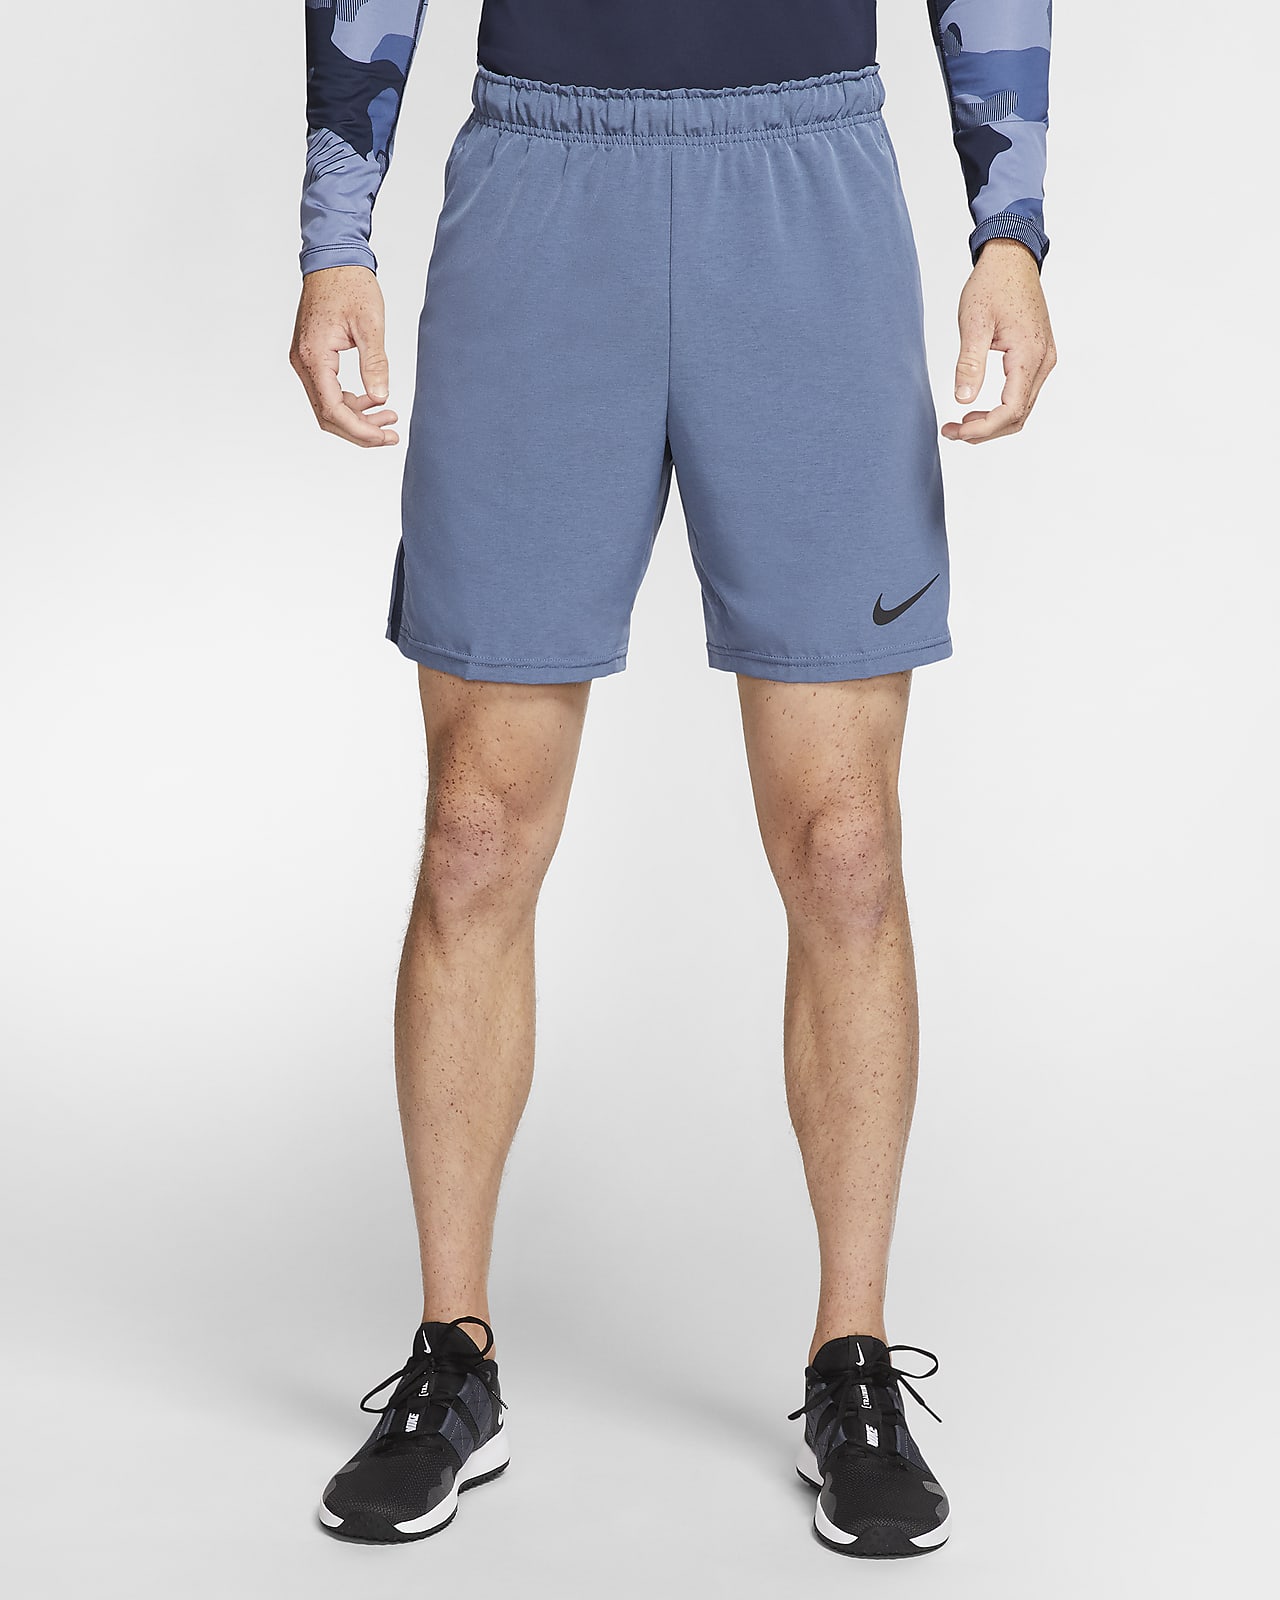 Nike Flex Training Shorts.